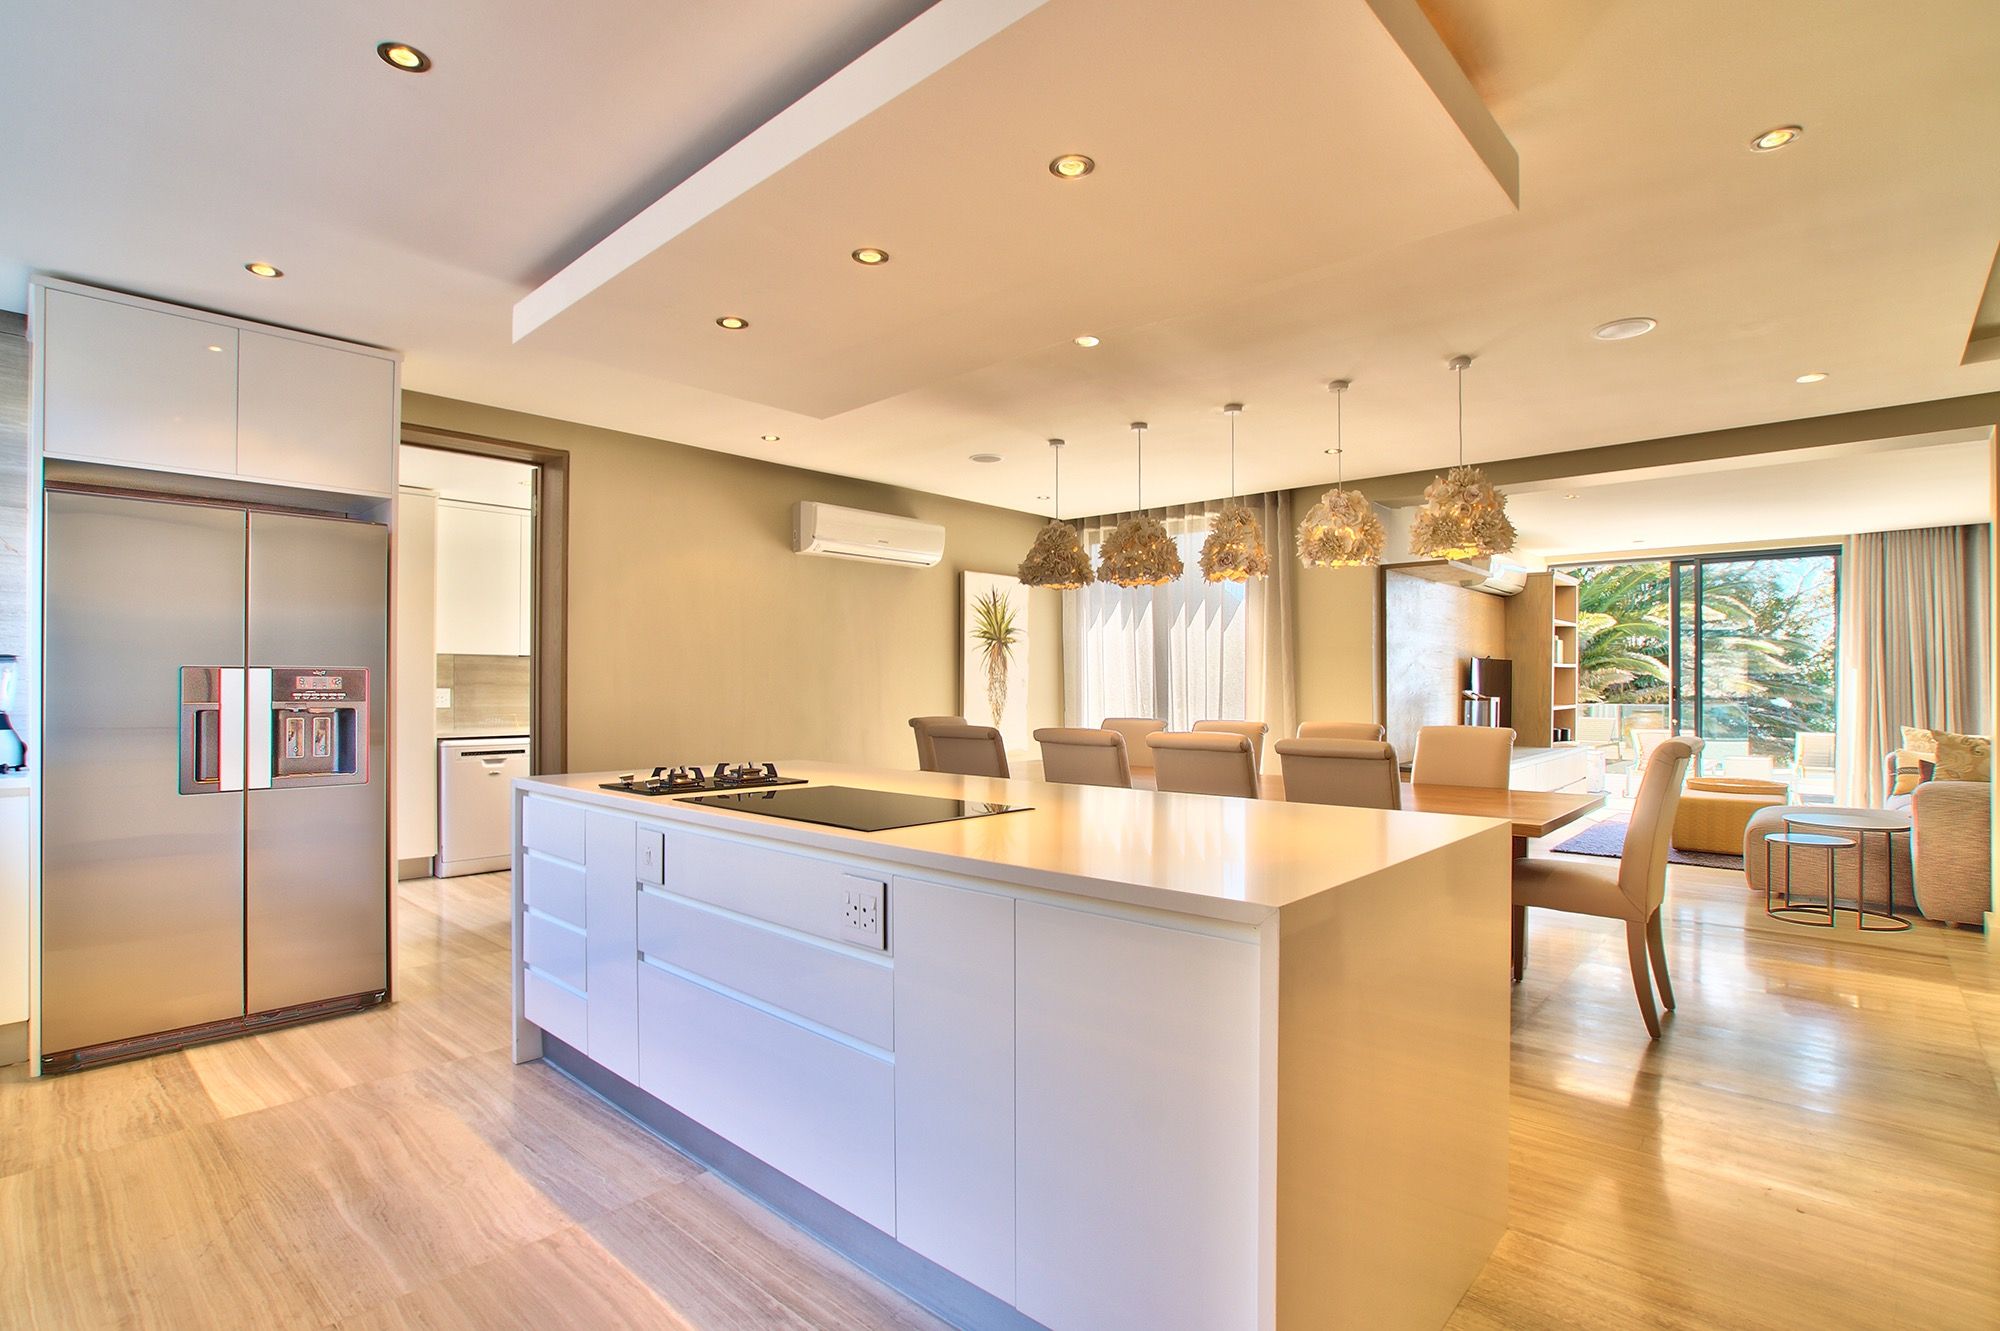 Basic Home Interior Design Principles For Good Appearance ...